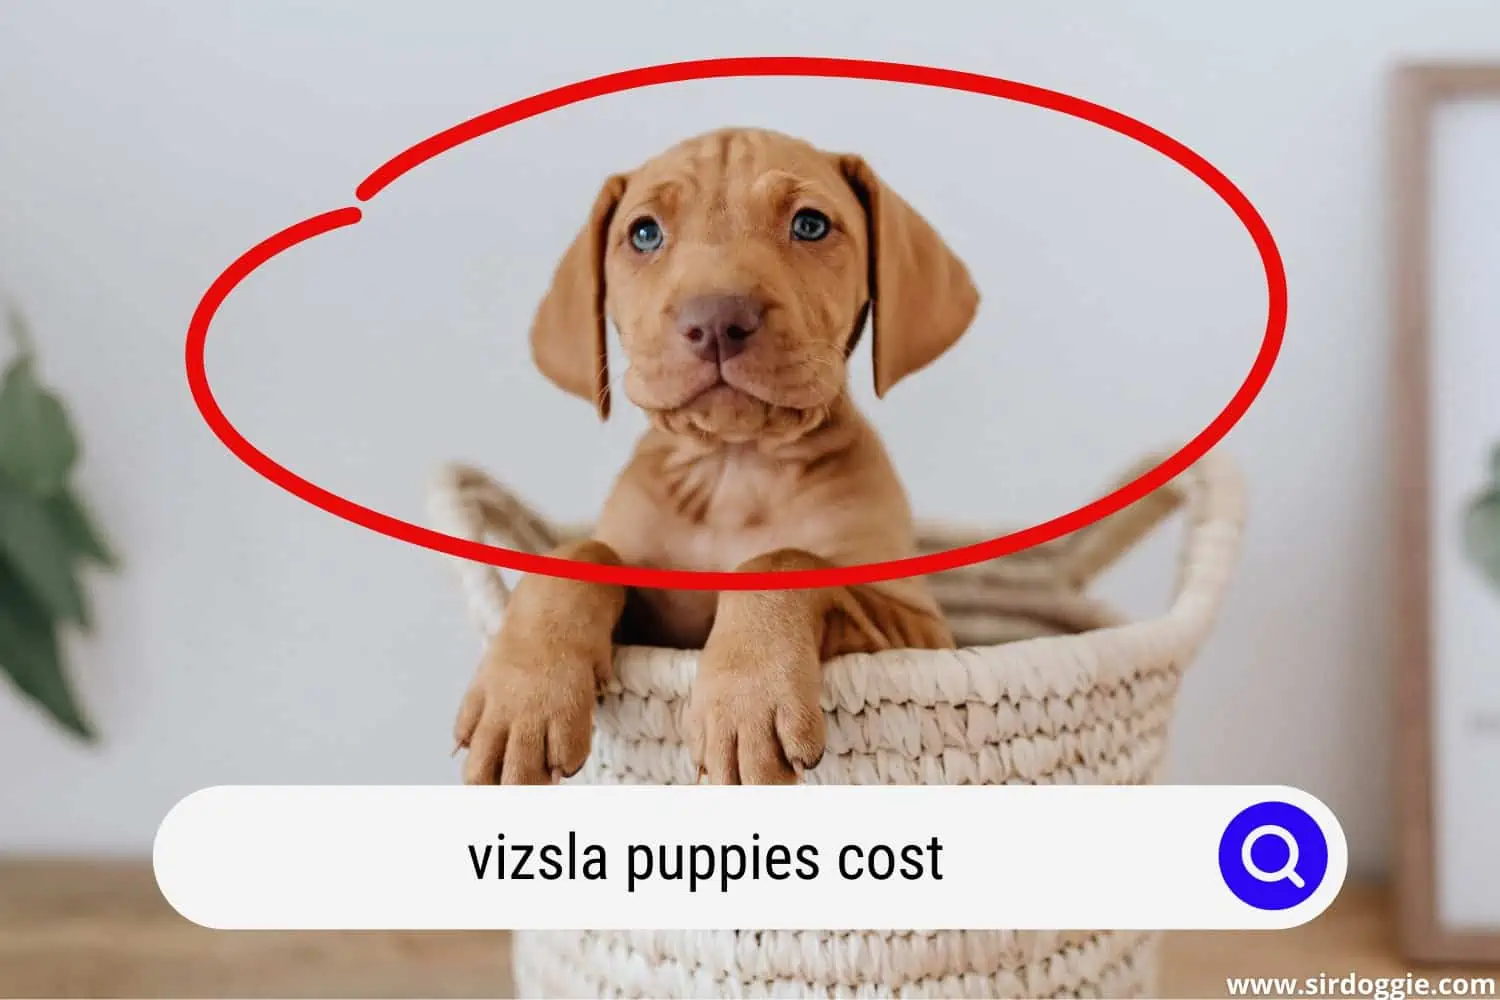 A cute Vizsla puppy in a basket